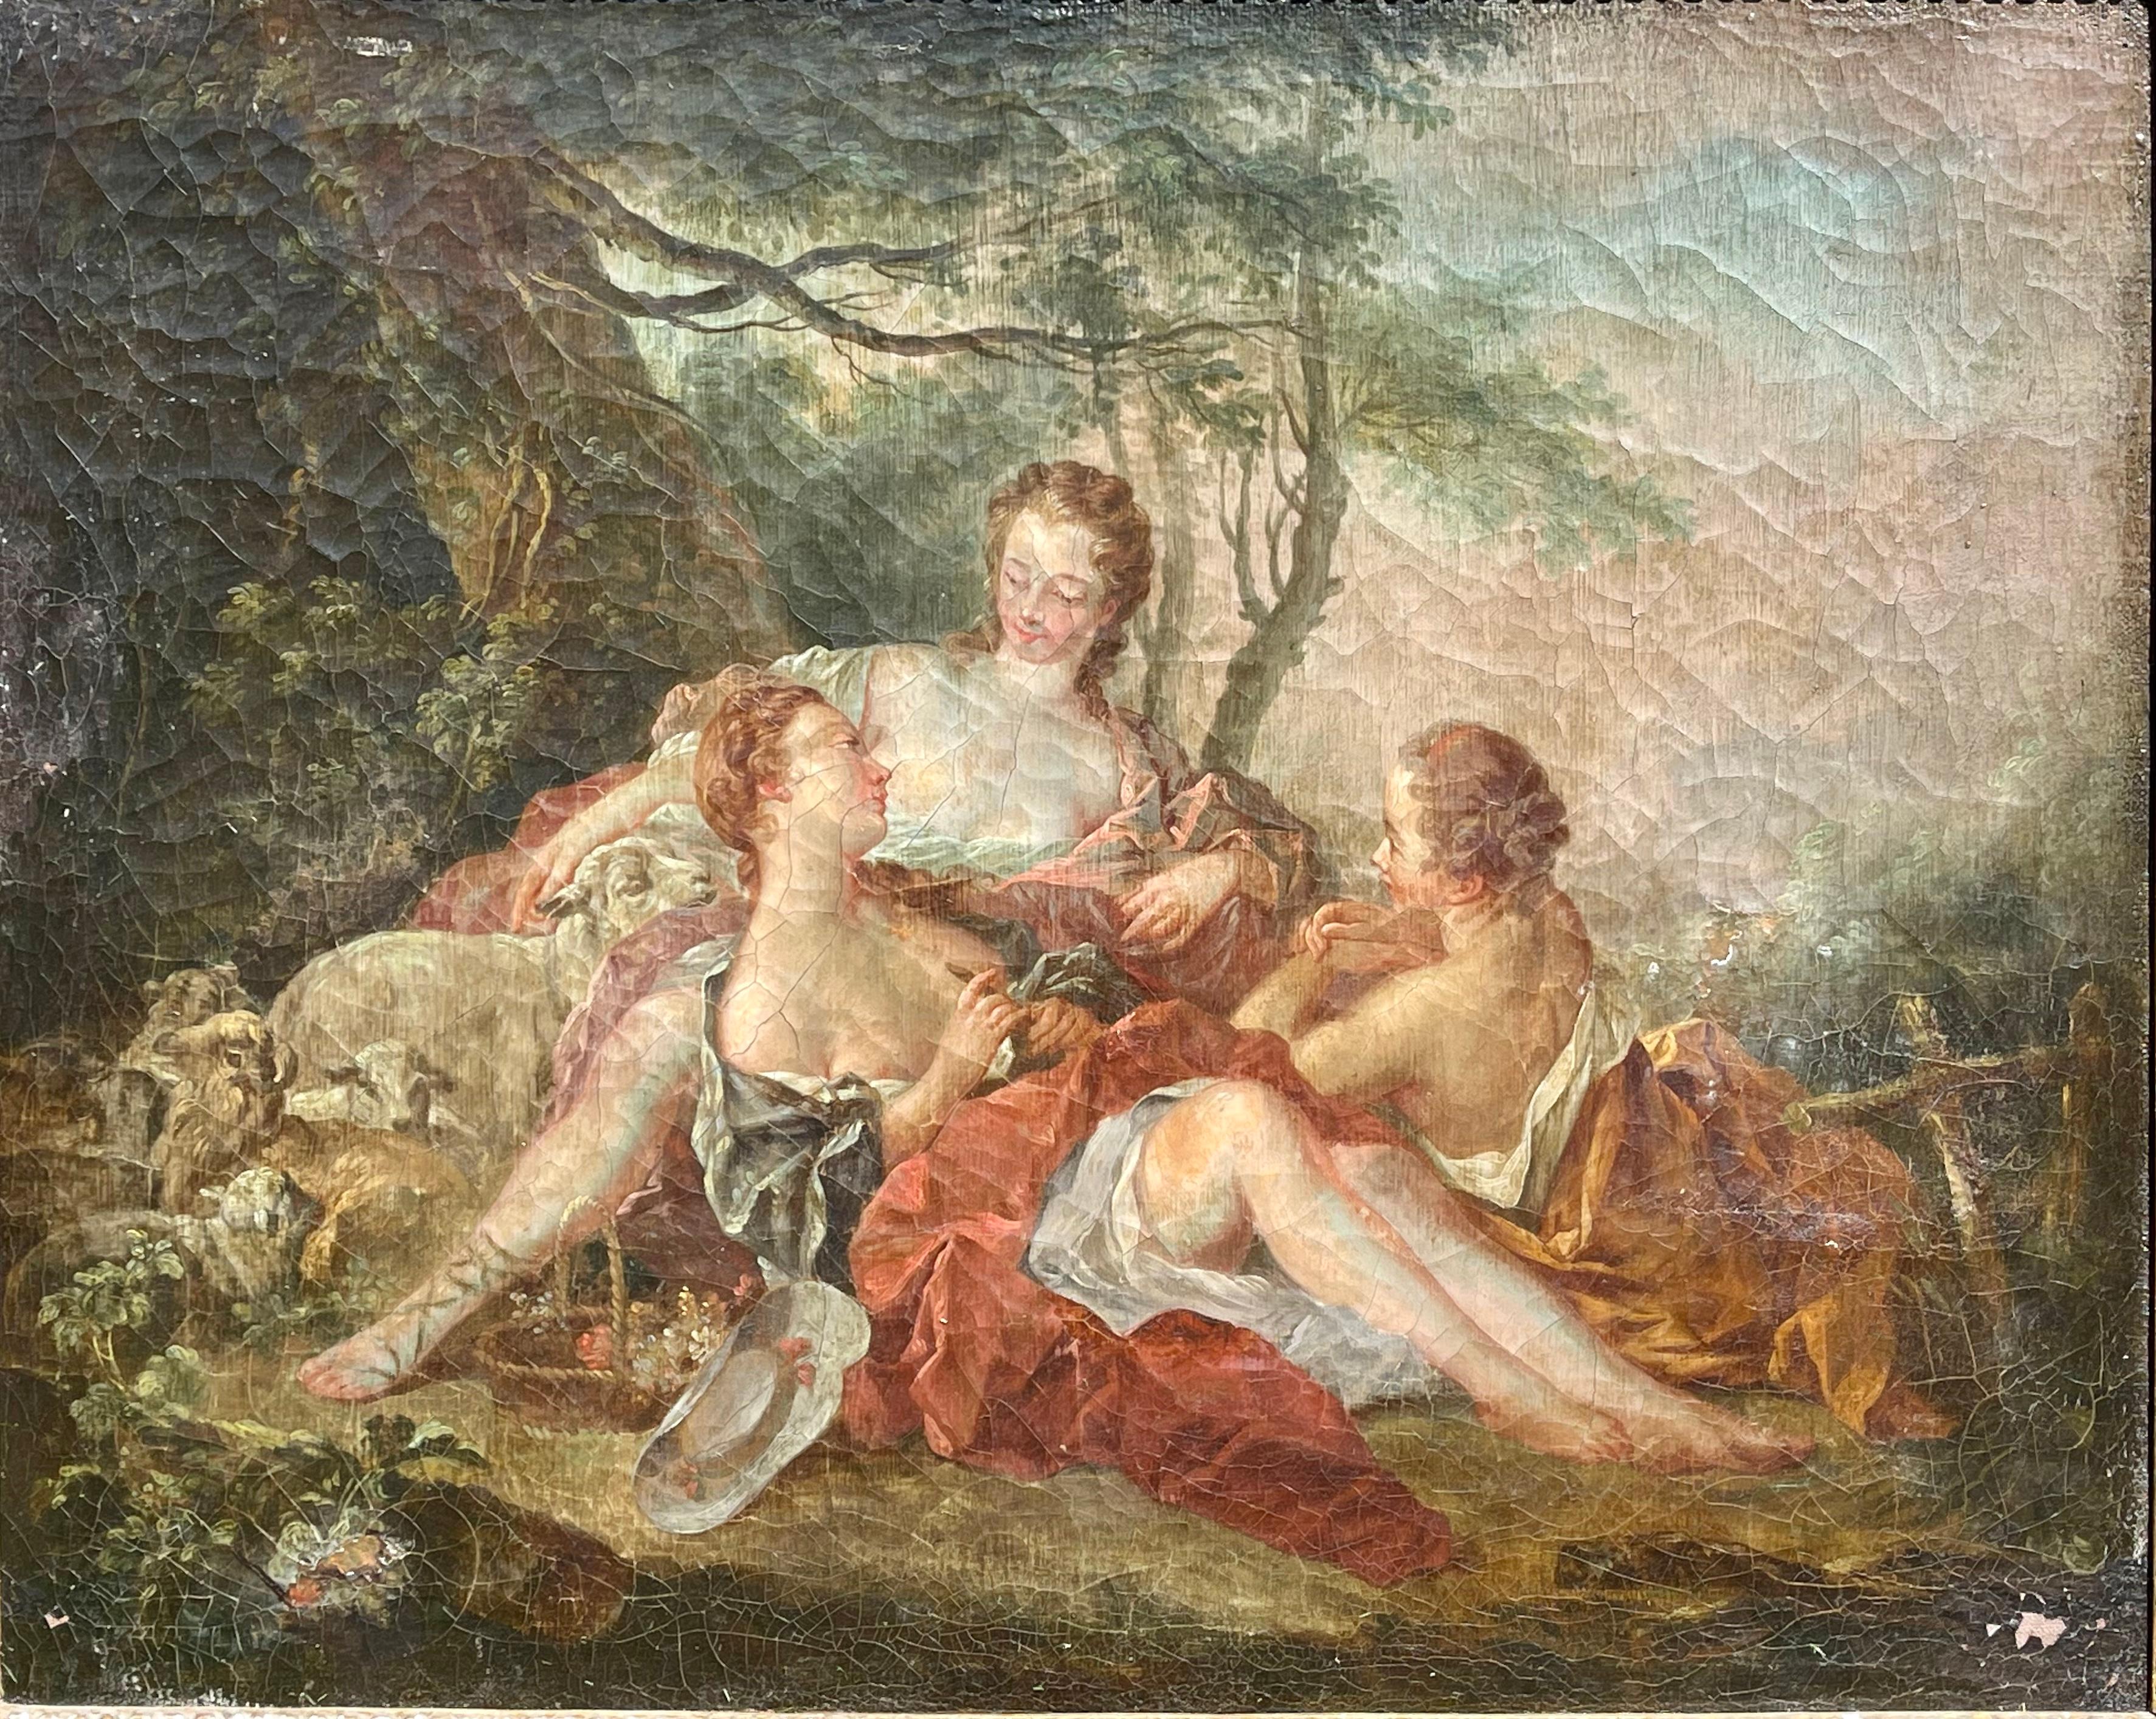 18th century painting representing 